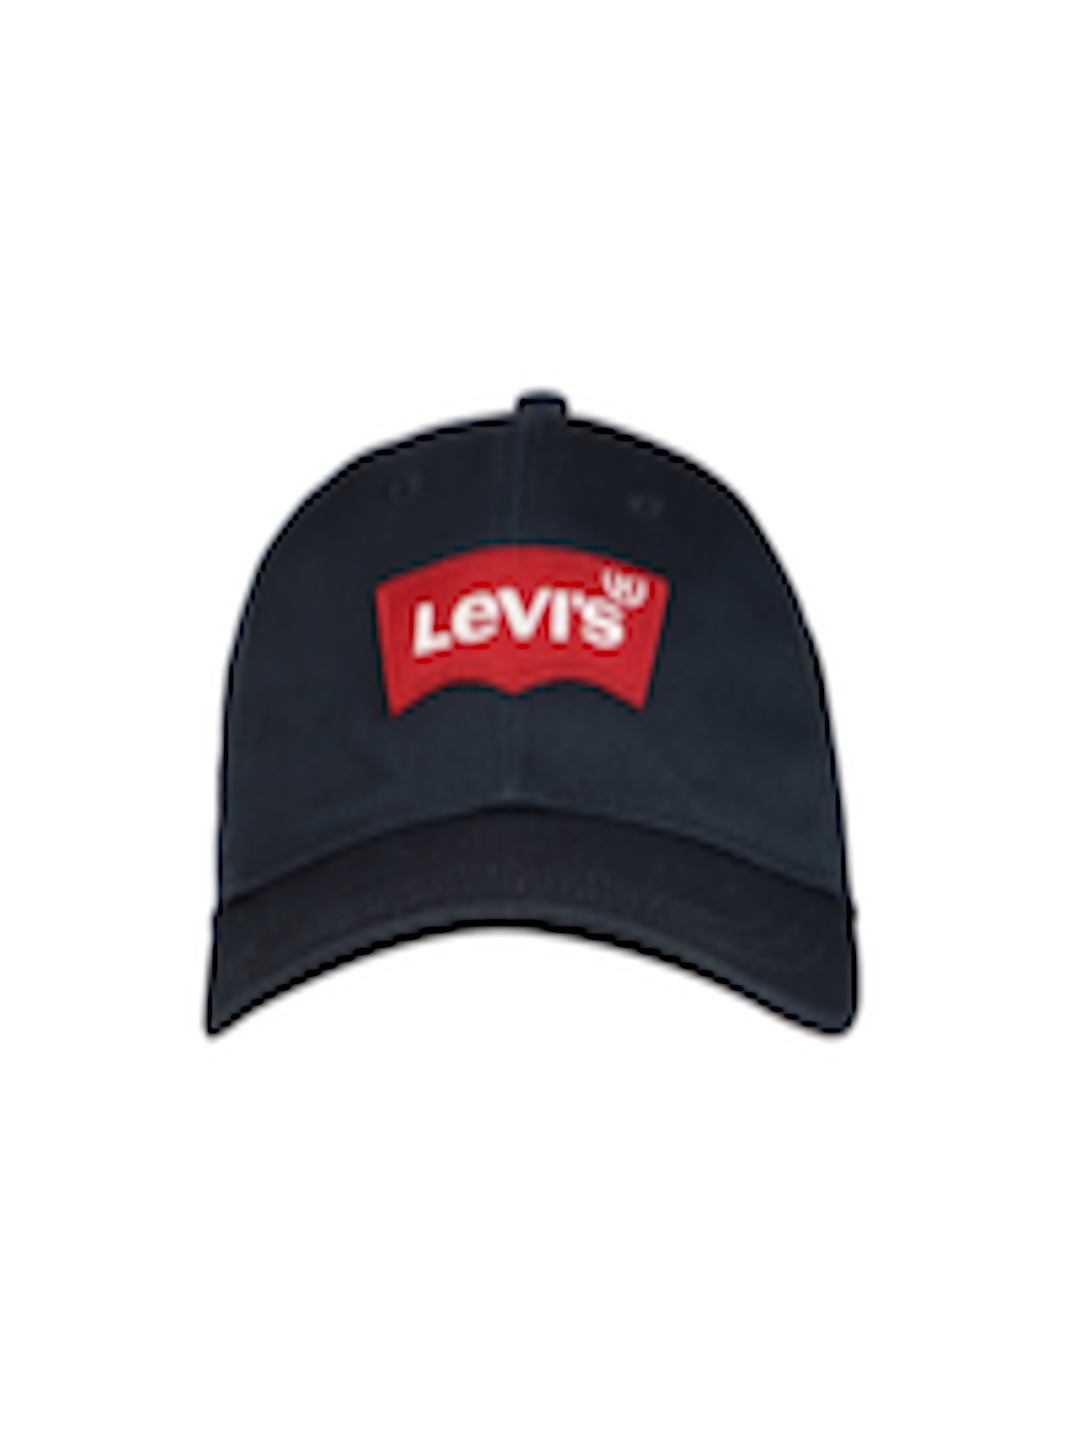 Buy Levis Unisex Navy Blue Solid Baseball Cap - Caps for Unisex ...